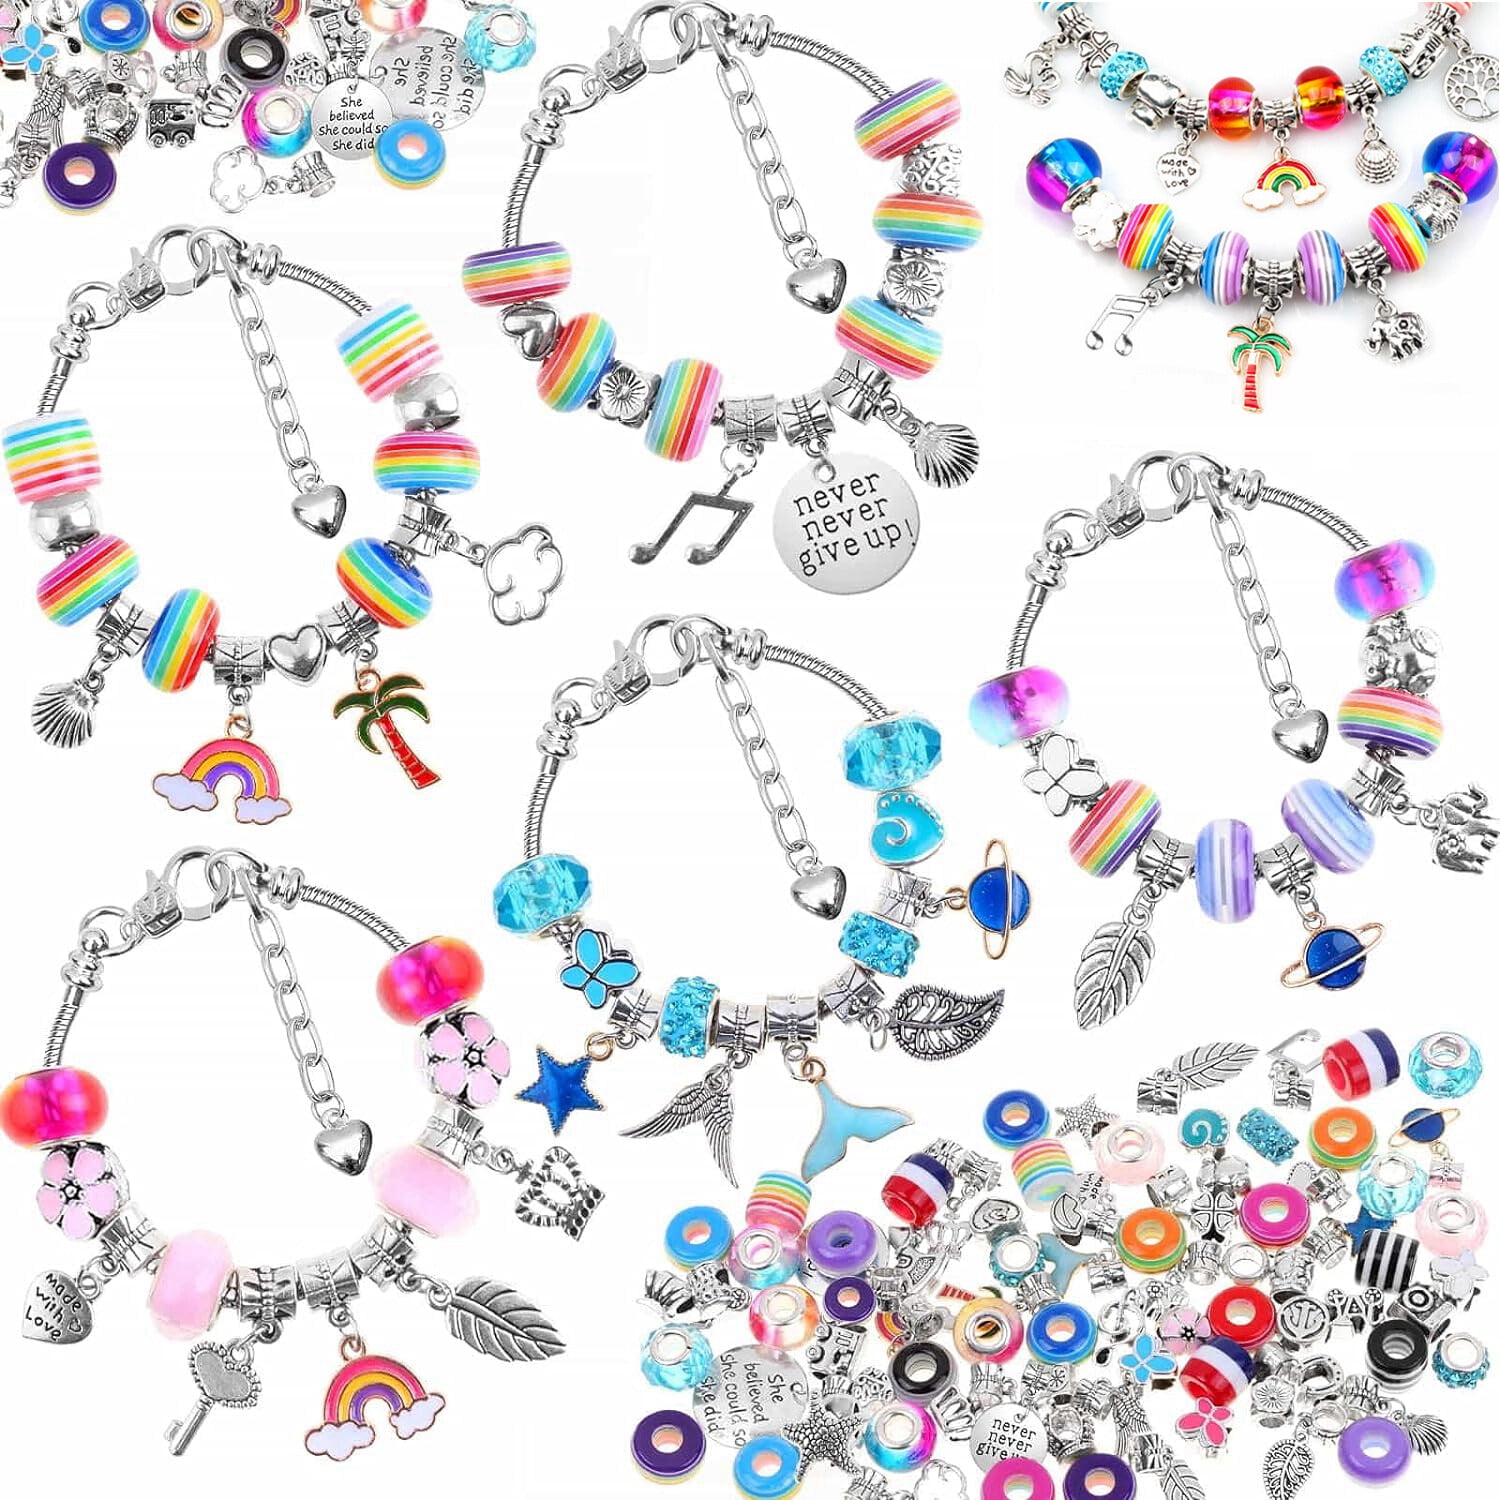  Pony Beads, 3,300 pcs 9mm Pony Beads Set in 23 Colors